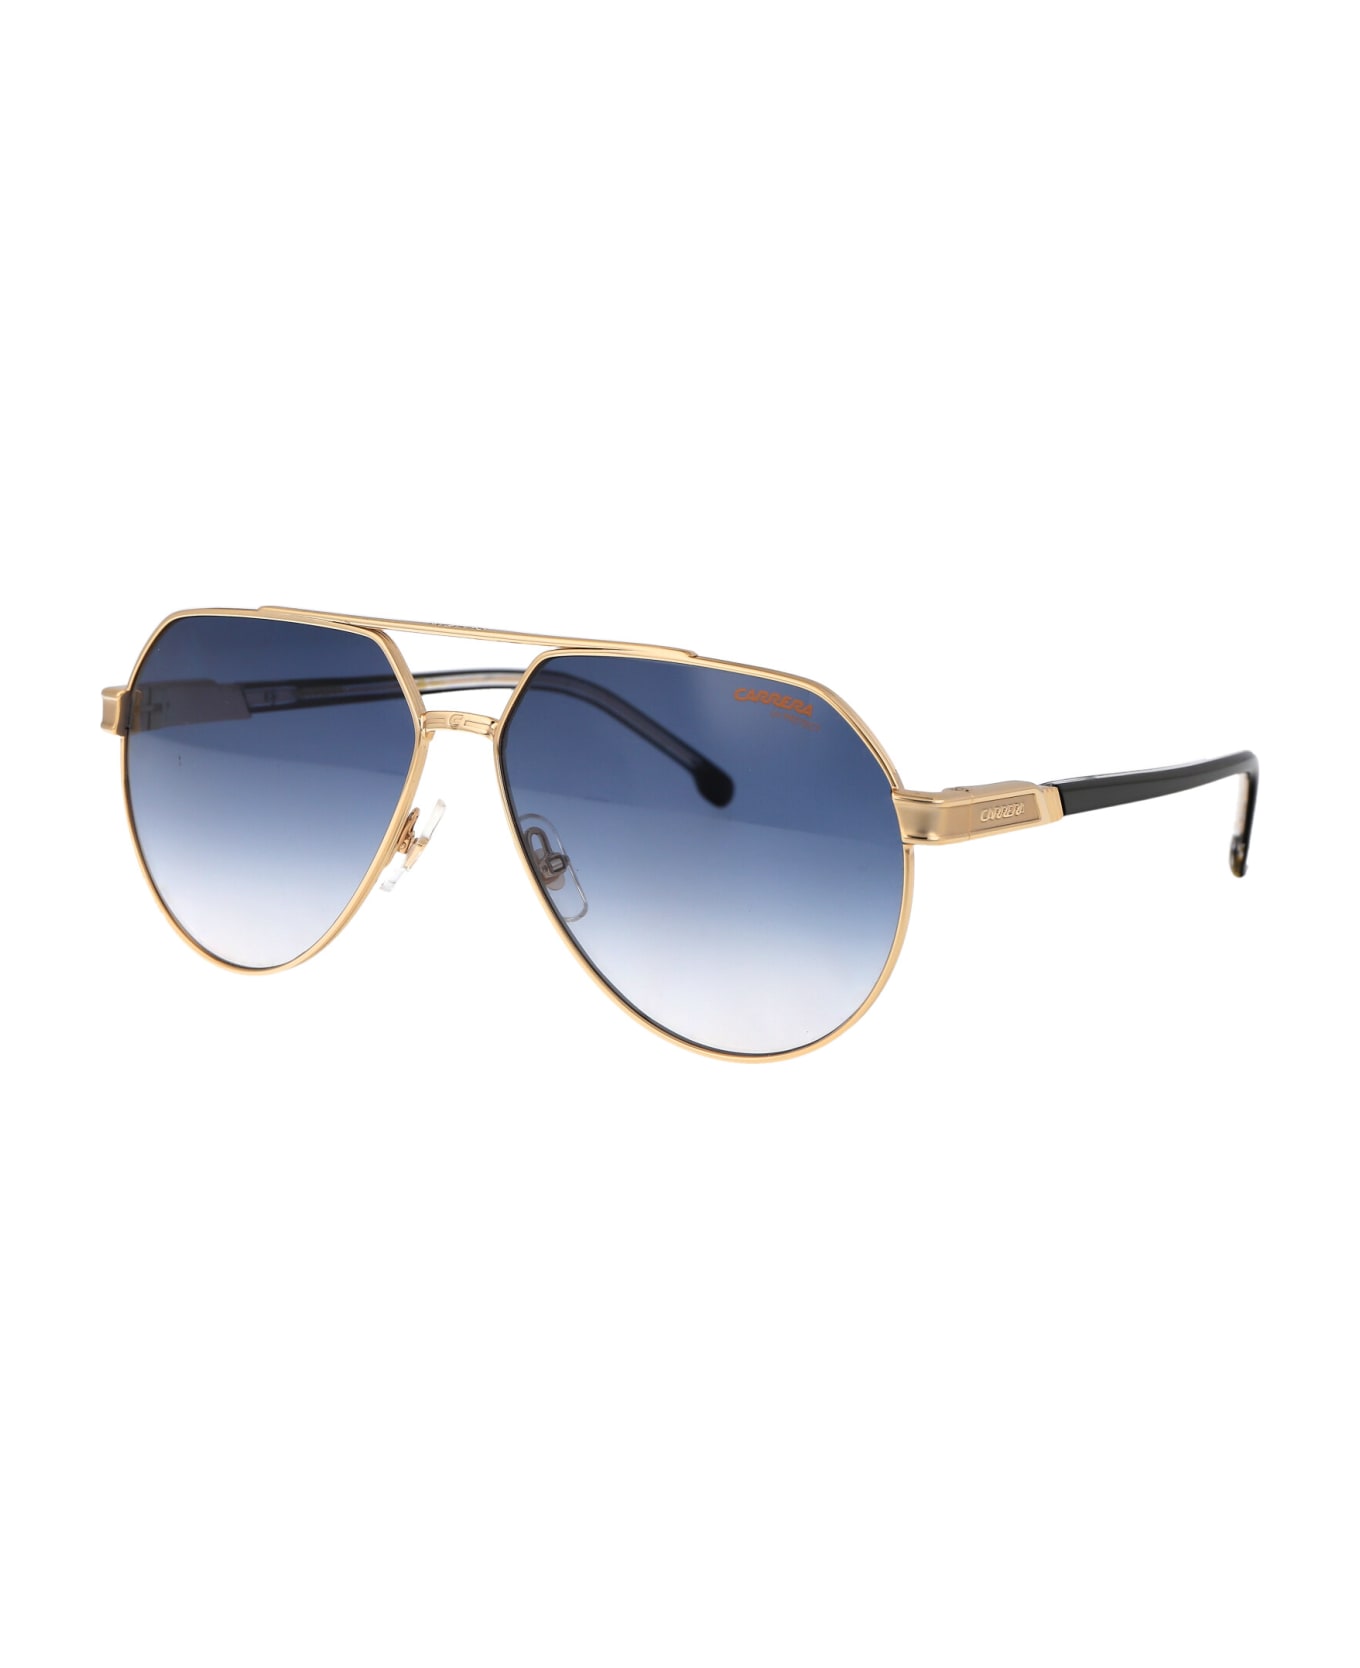 Carrera 1067/s Sunglasses - J5G08 GOLD